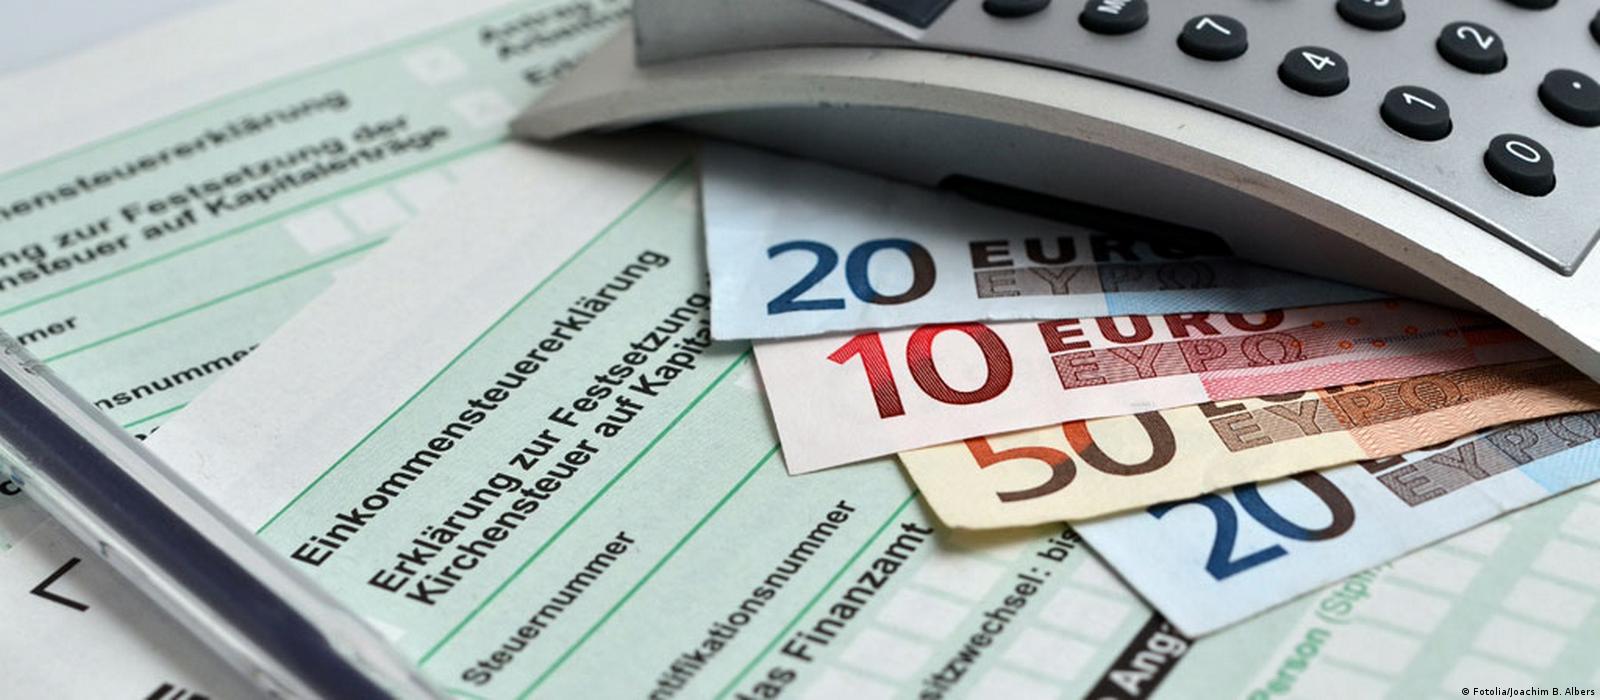 Сколько платят налоги в германии www s rich